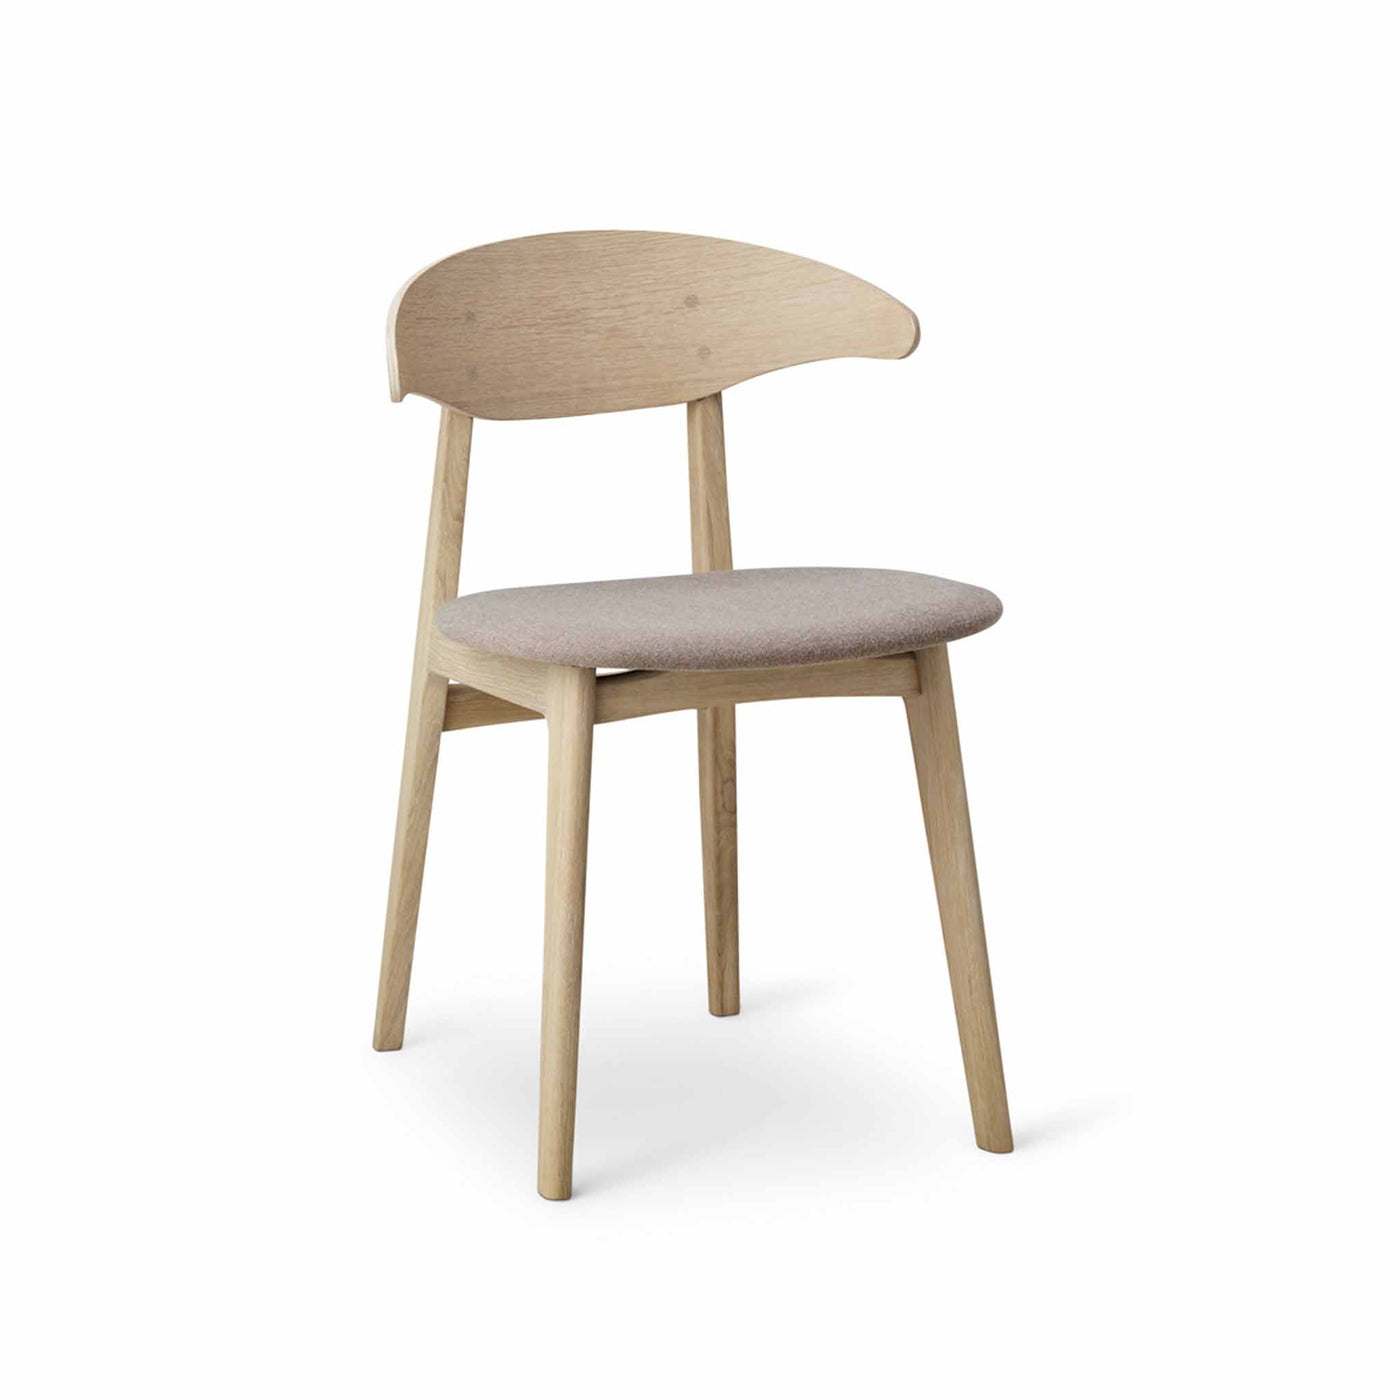 Arki Ram Wood spisebordsstol fra Kristensen & Kristensen i ask med sæde i gråt cura stof.